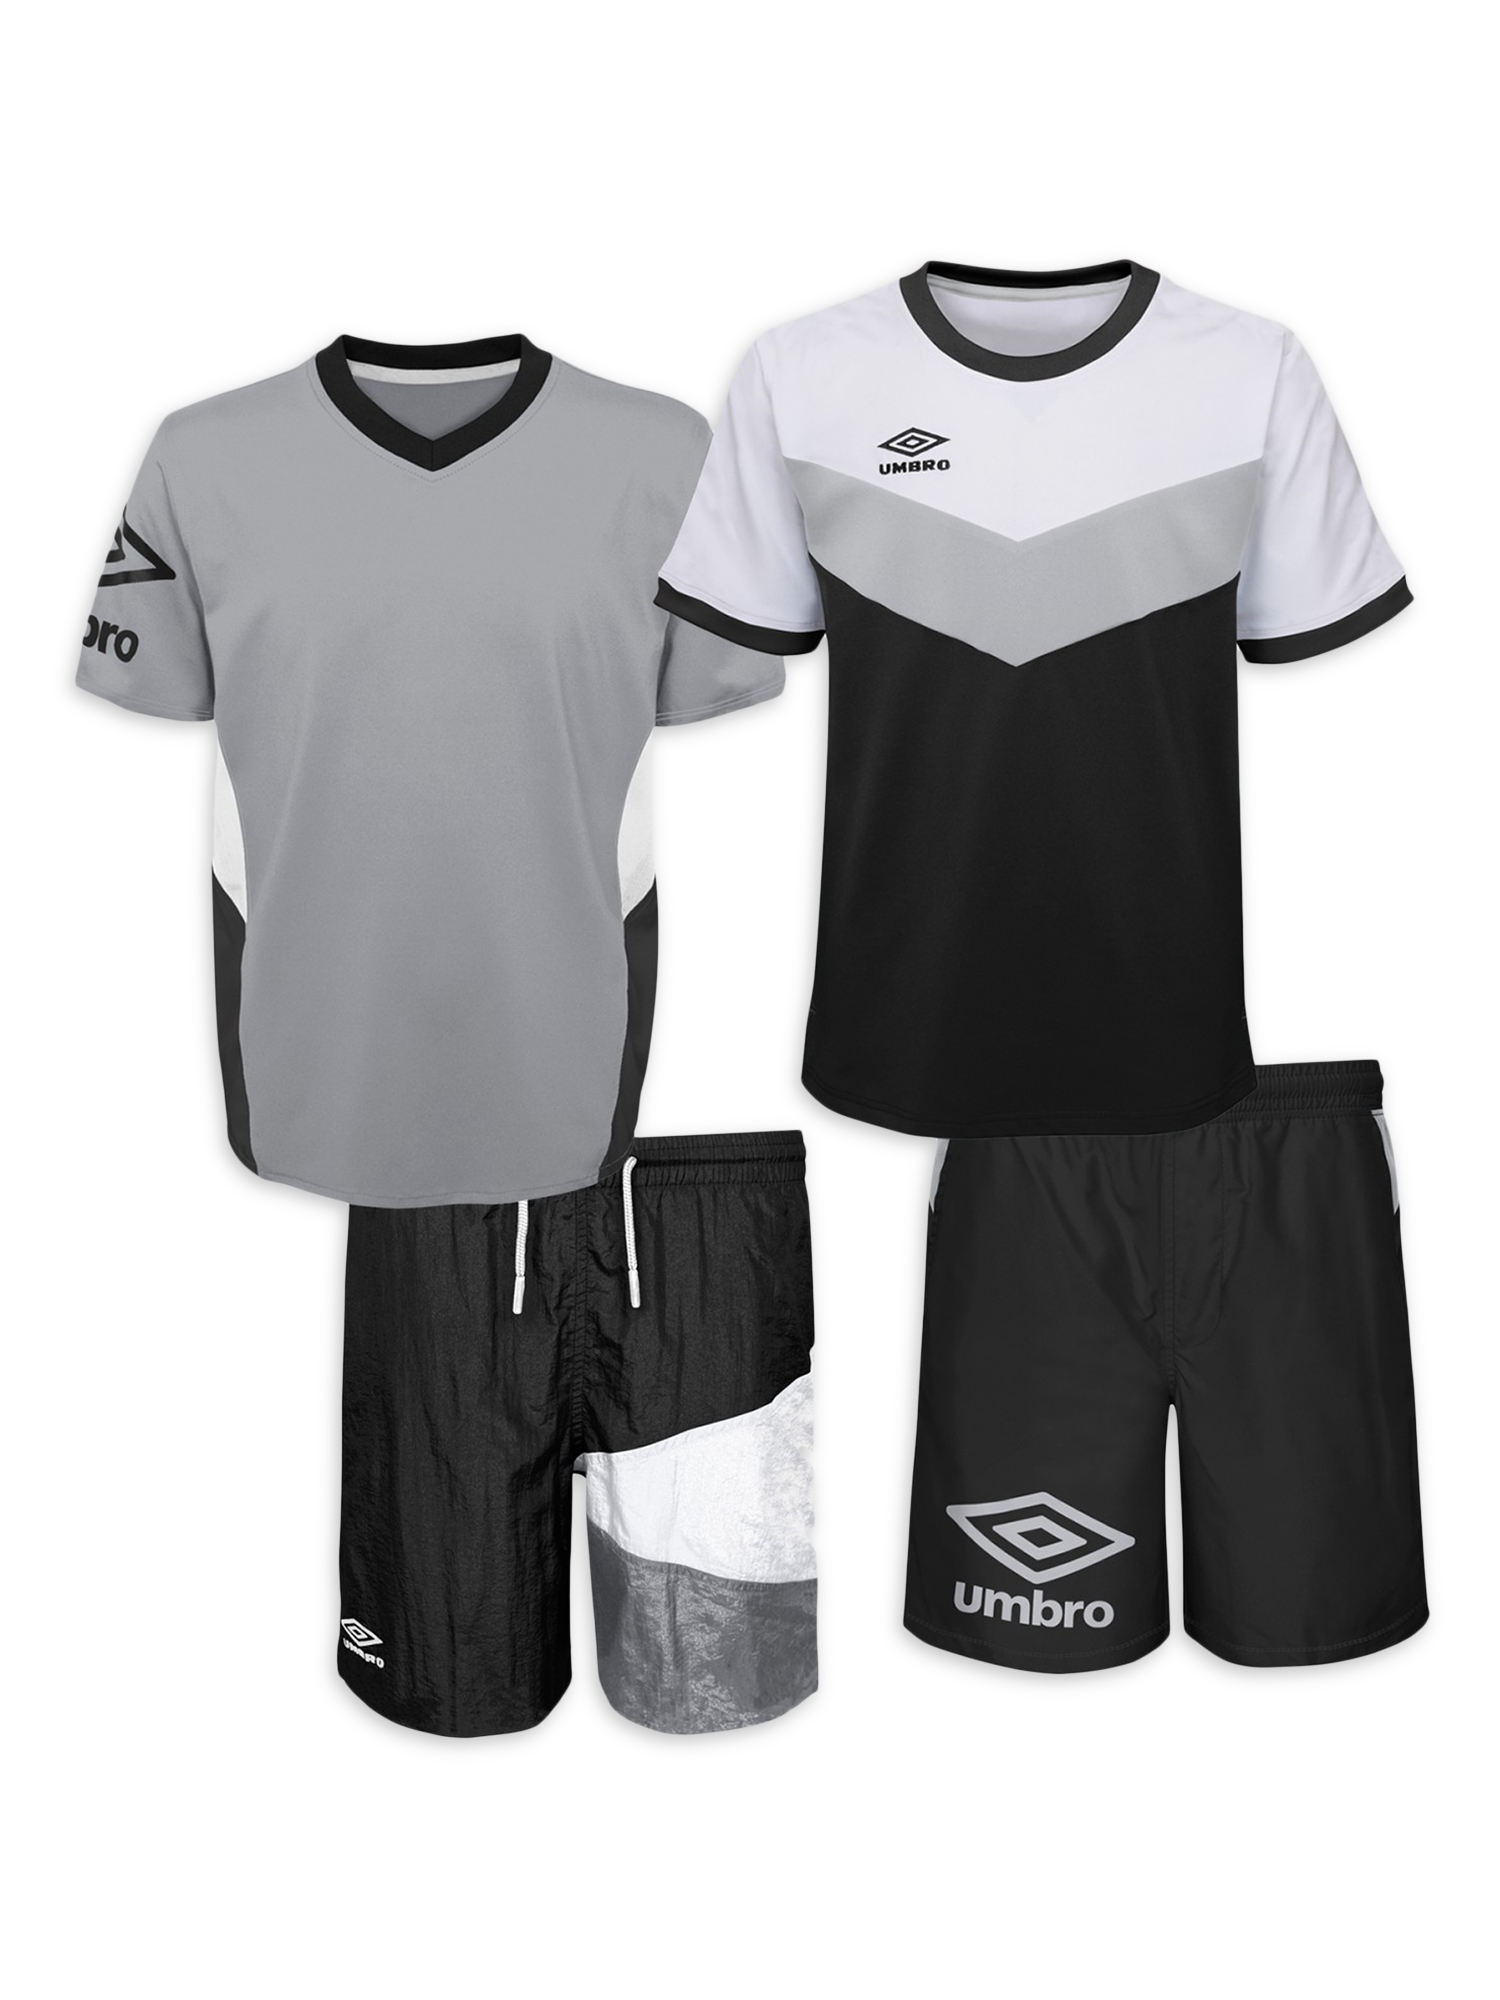 Umbro Boys Retro Diamond Soccer Jerseys and Shorts 4-Piece Outfit Set, Sizes 4-18 - image 1 of 9